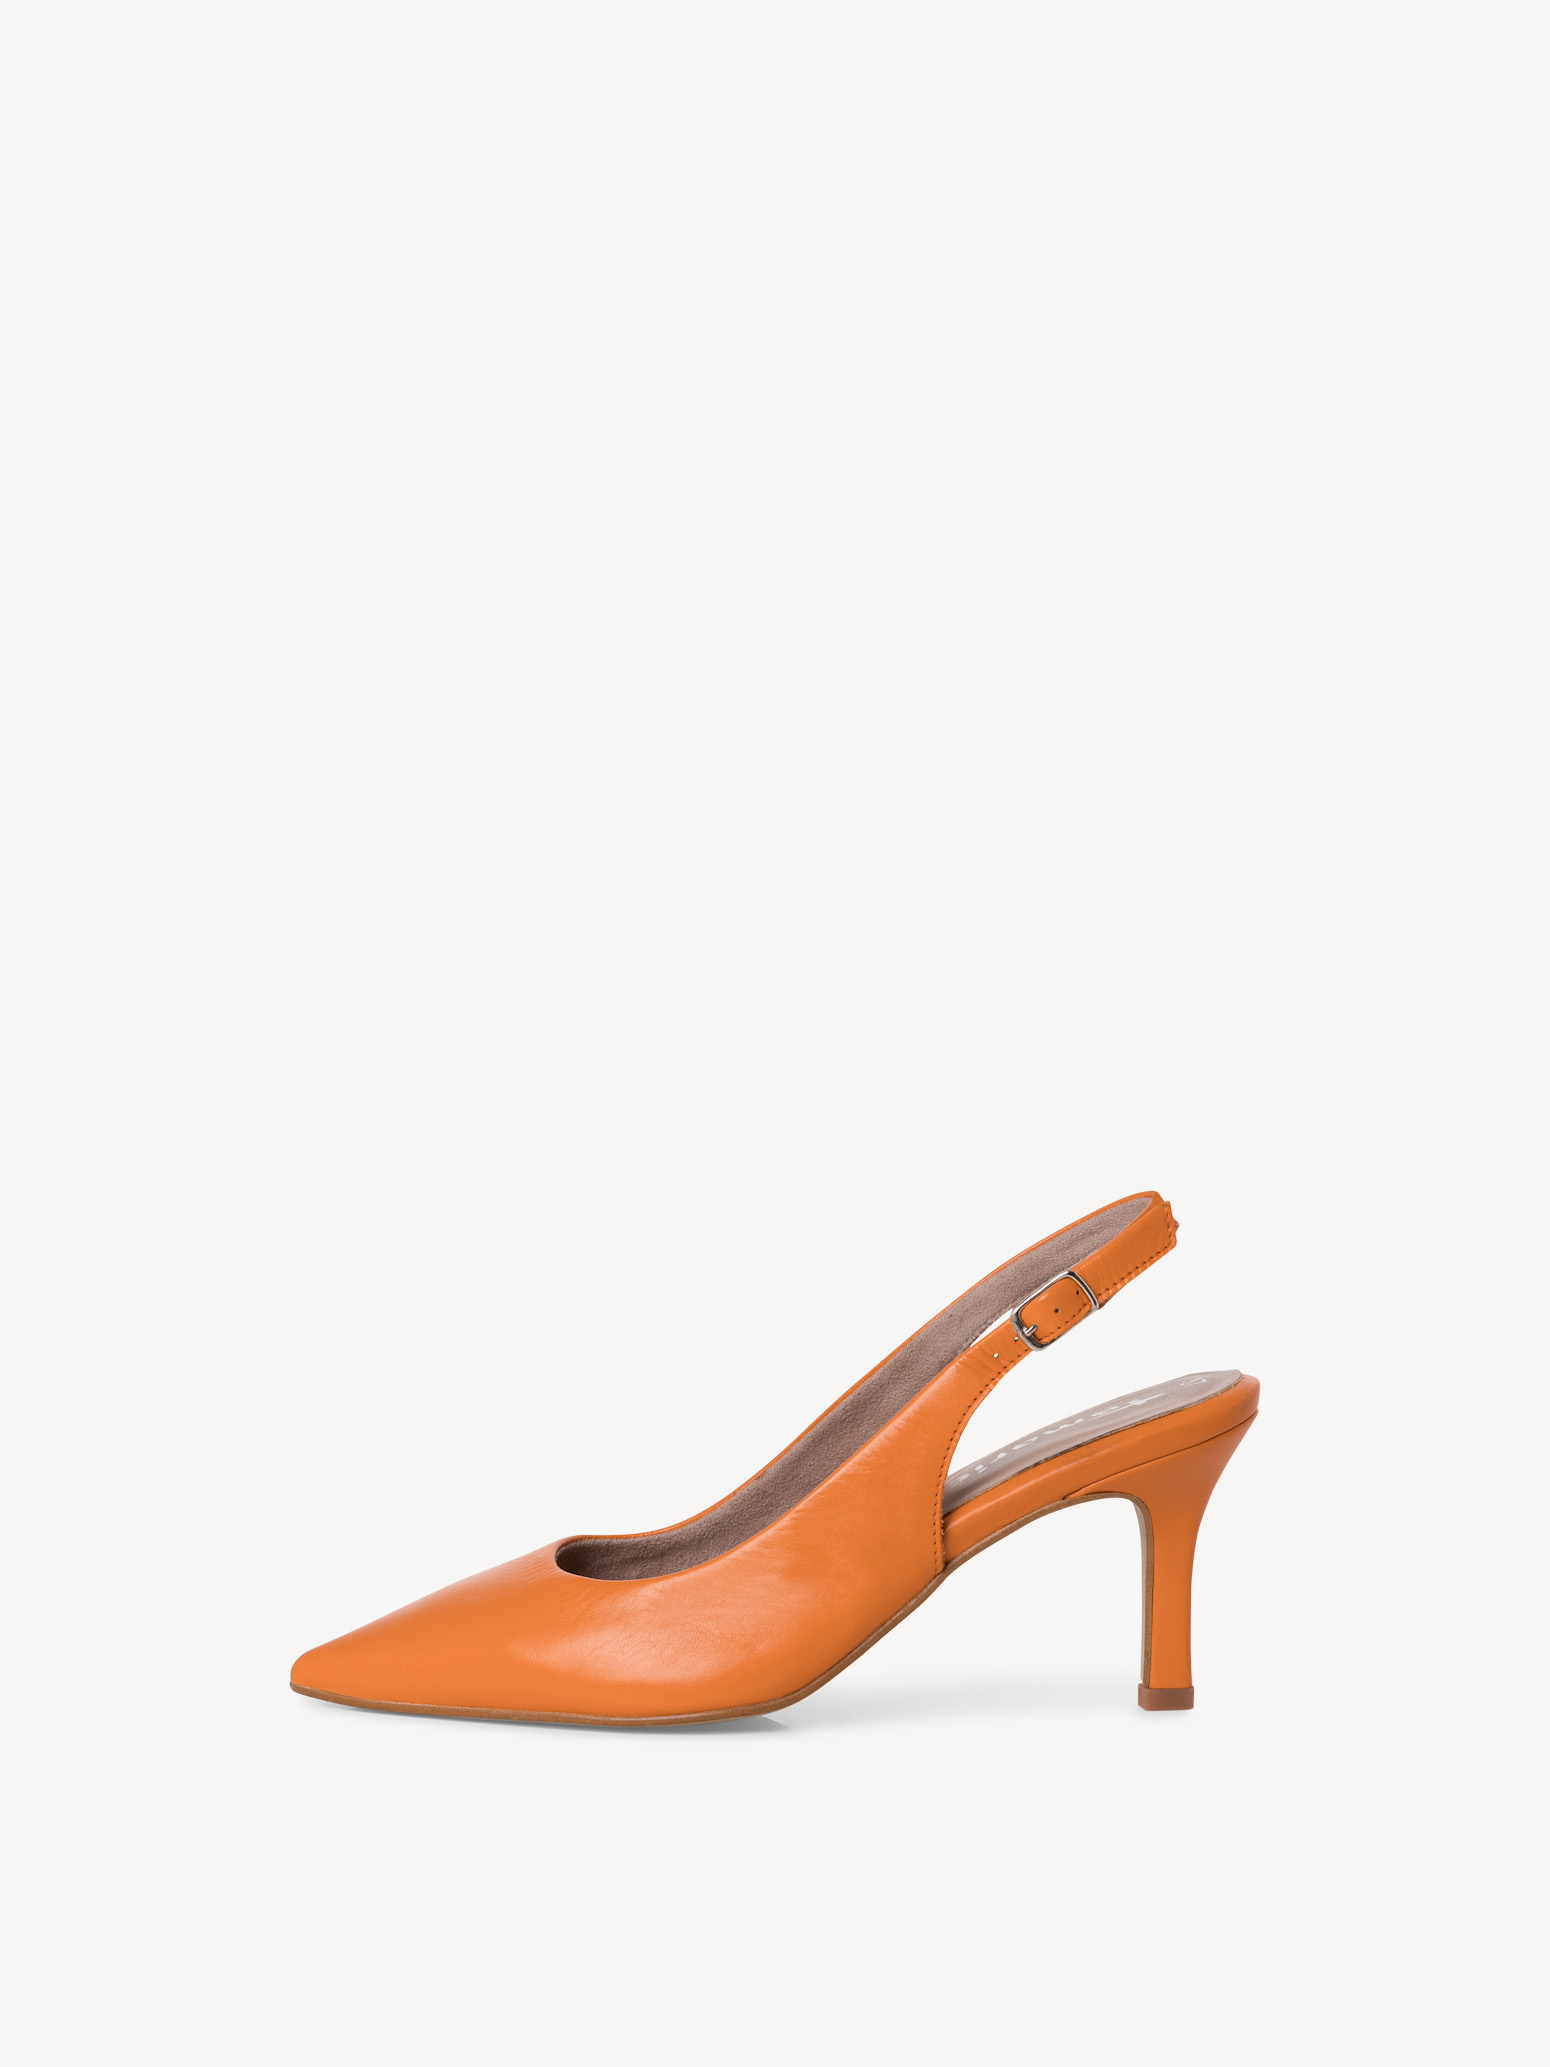 Leather sling pumps - orange 1-29608-42-606: Buy Tamaris Sling pumps ...